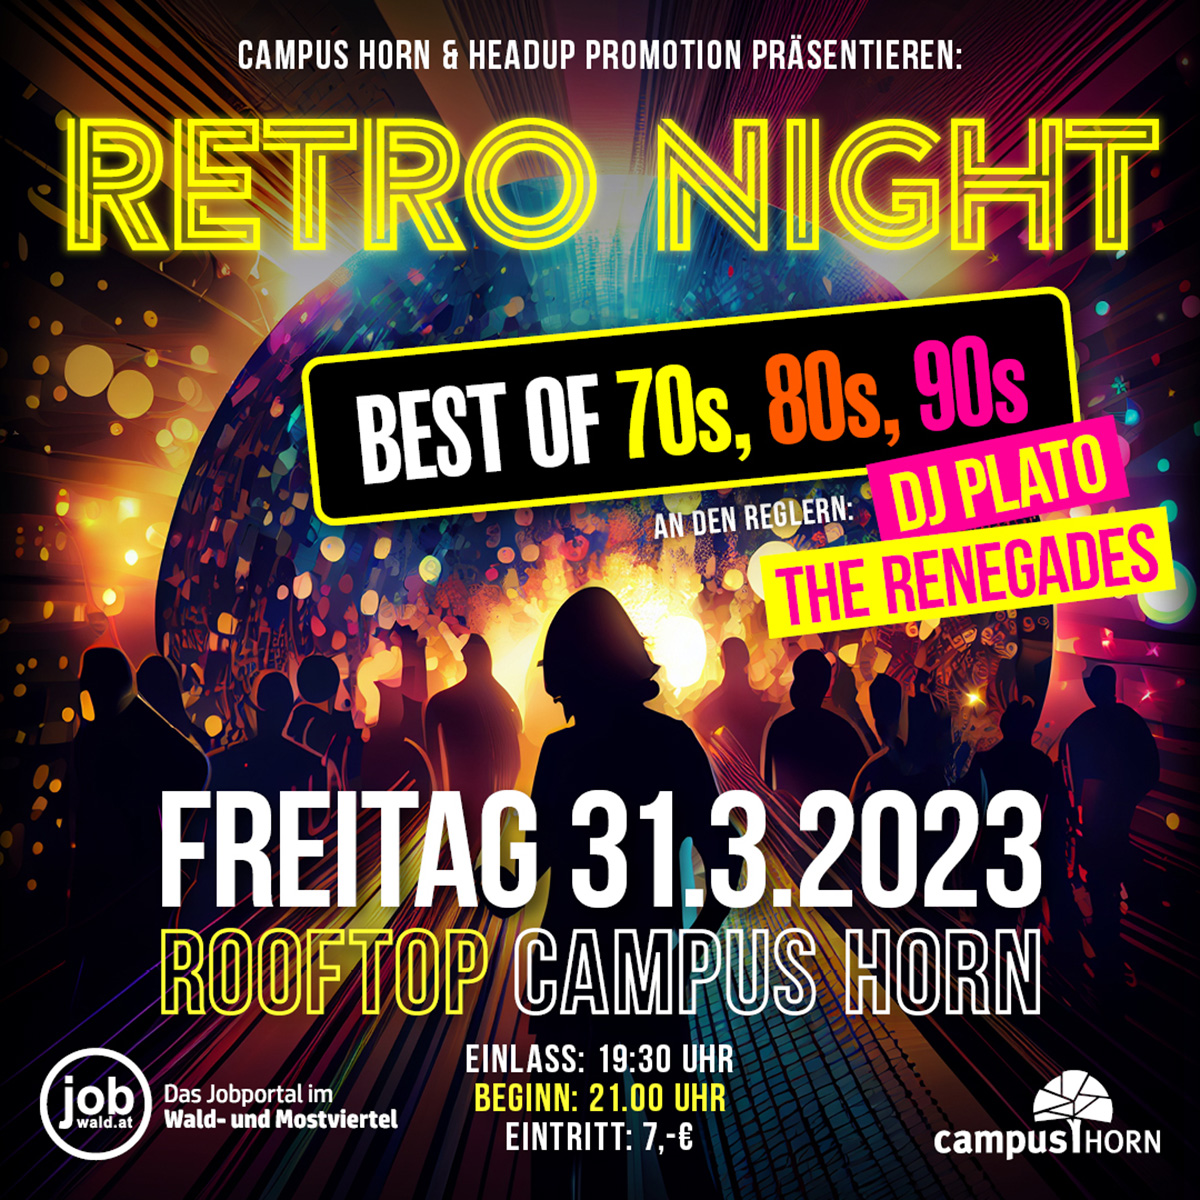 31. März - Campus Horn: "RETRO NIGHT" Best of 70s, 80s, 90s